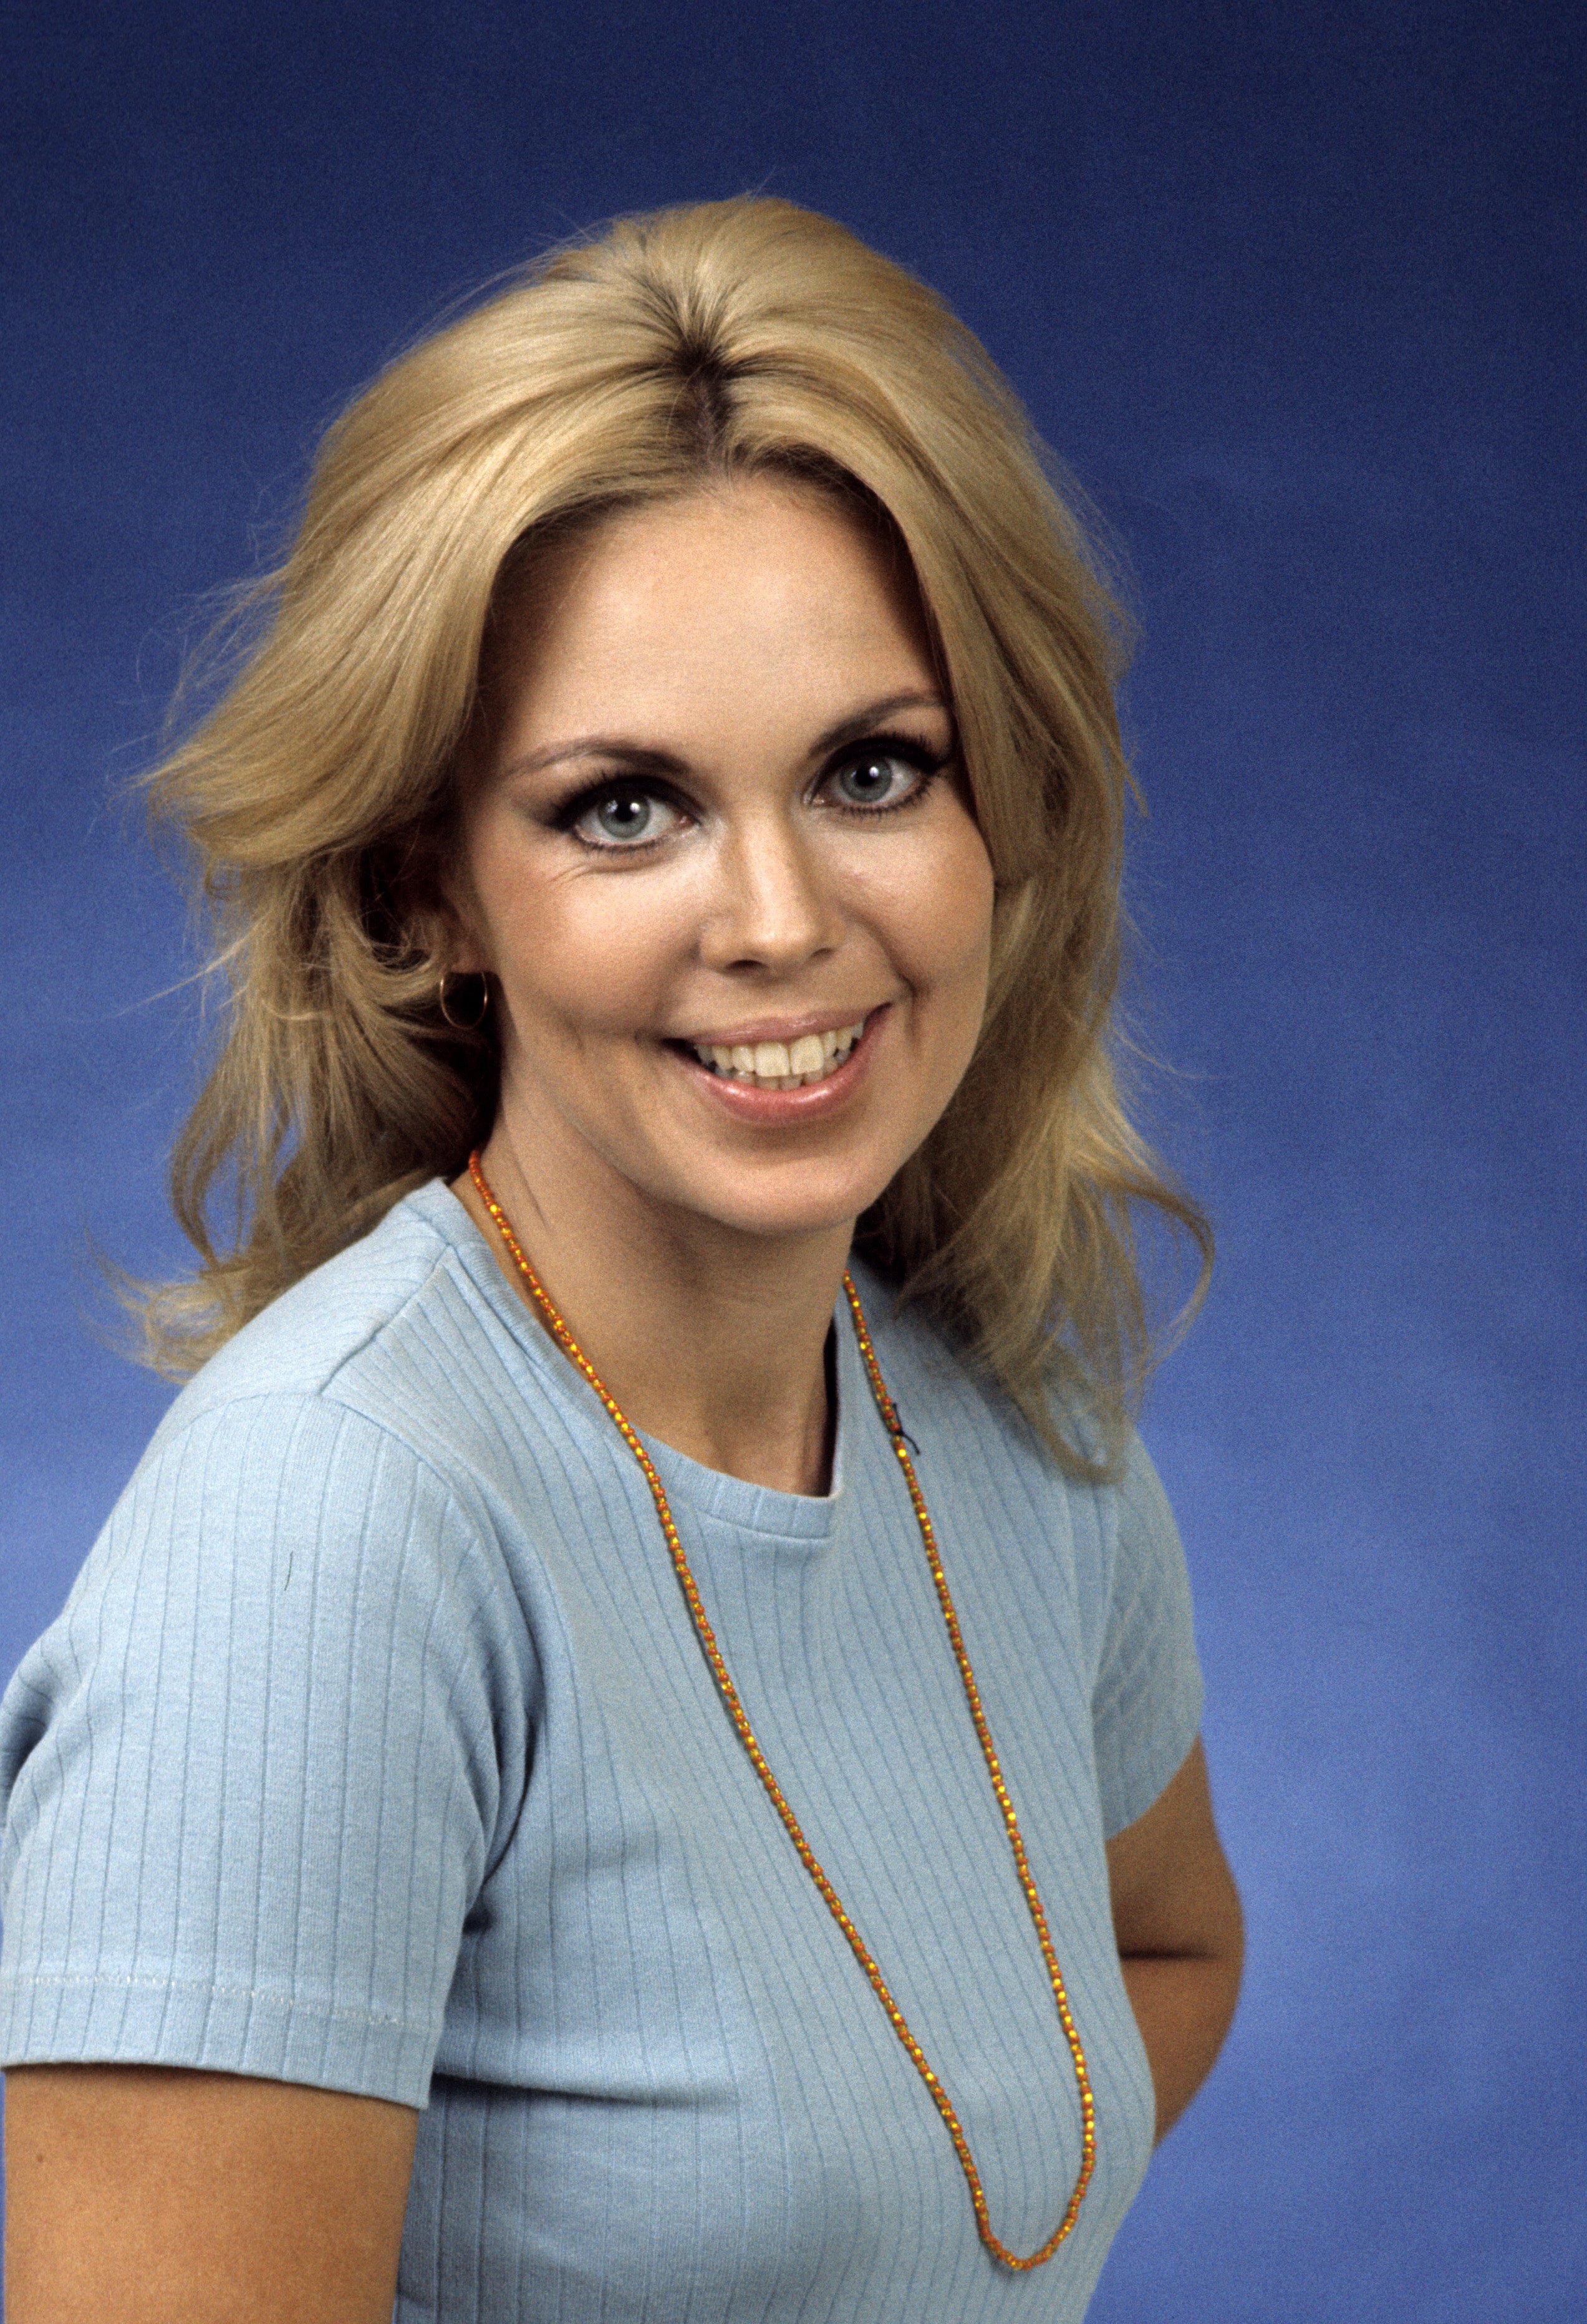 Lara Parker's portrait taken on April 7, 1969 | Source: Getty Images